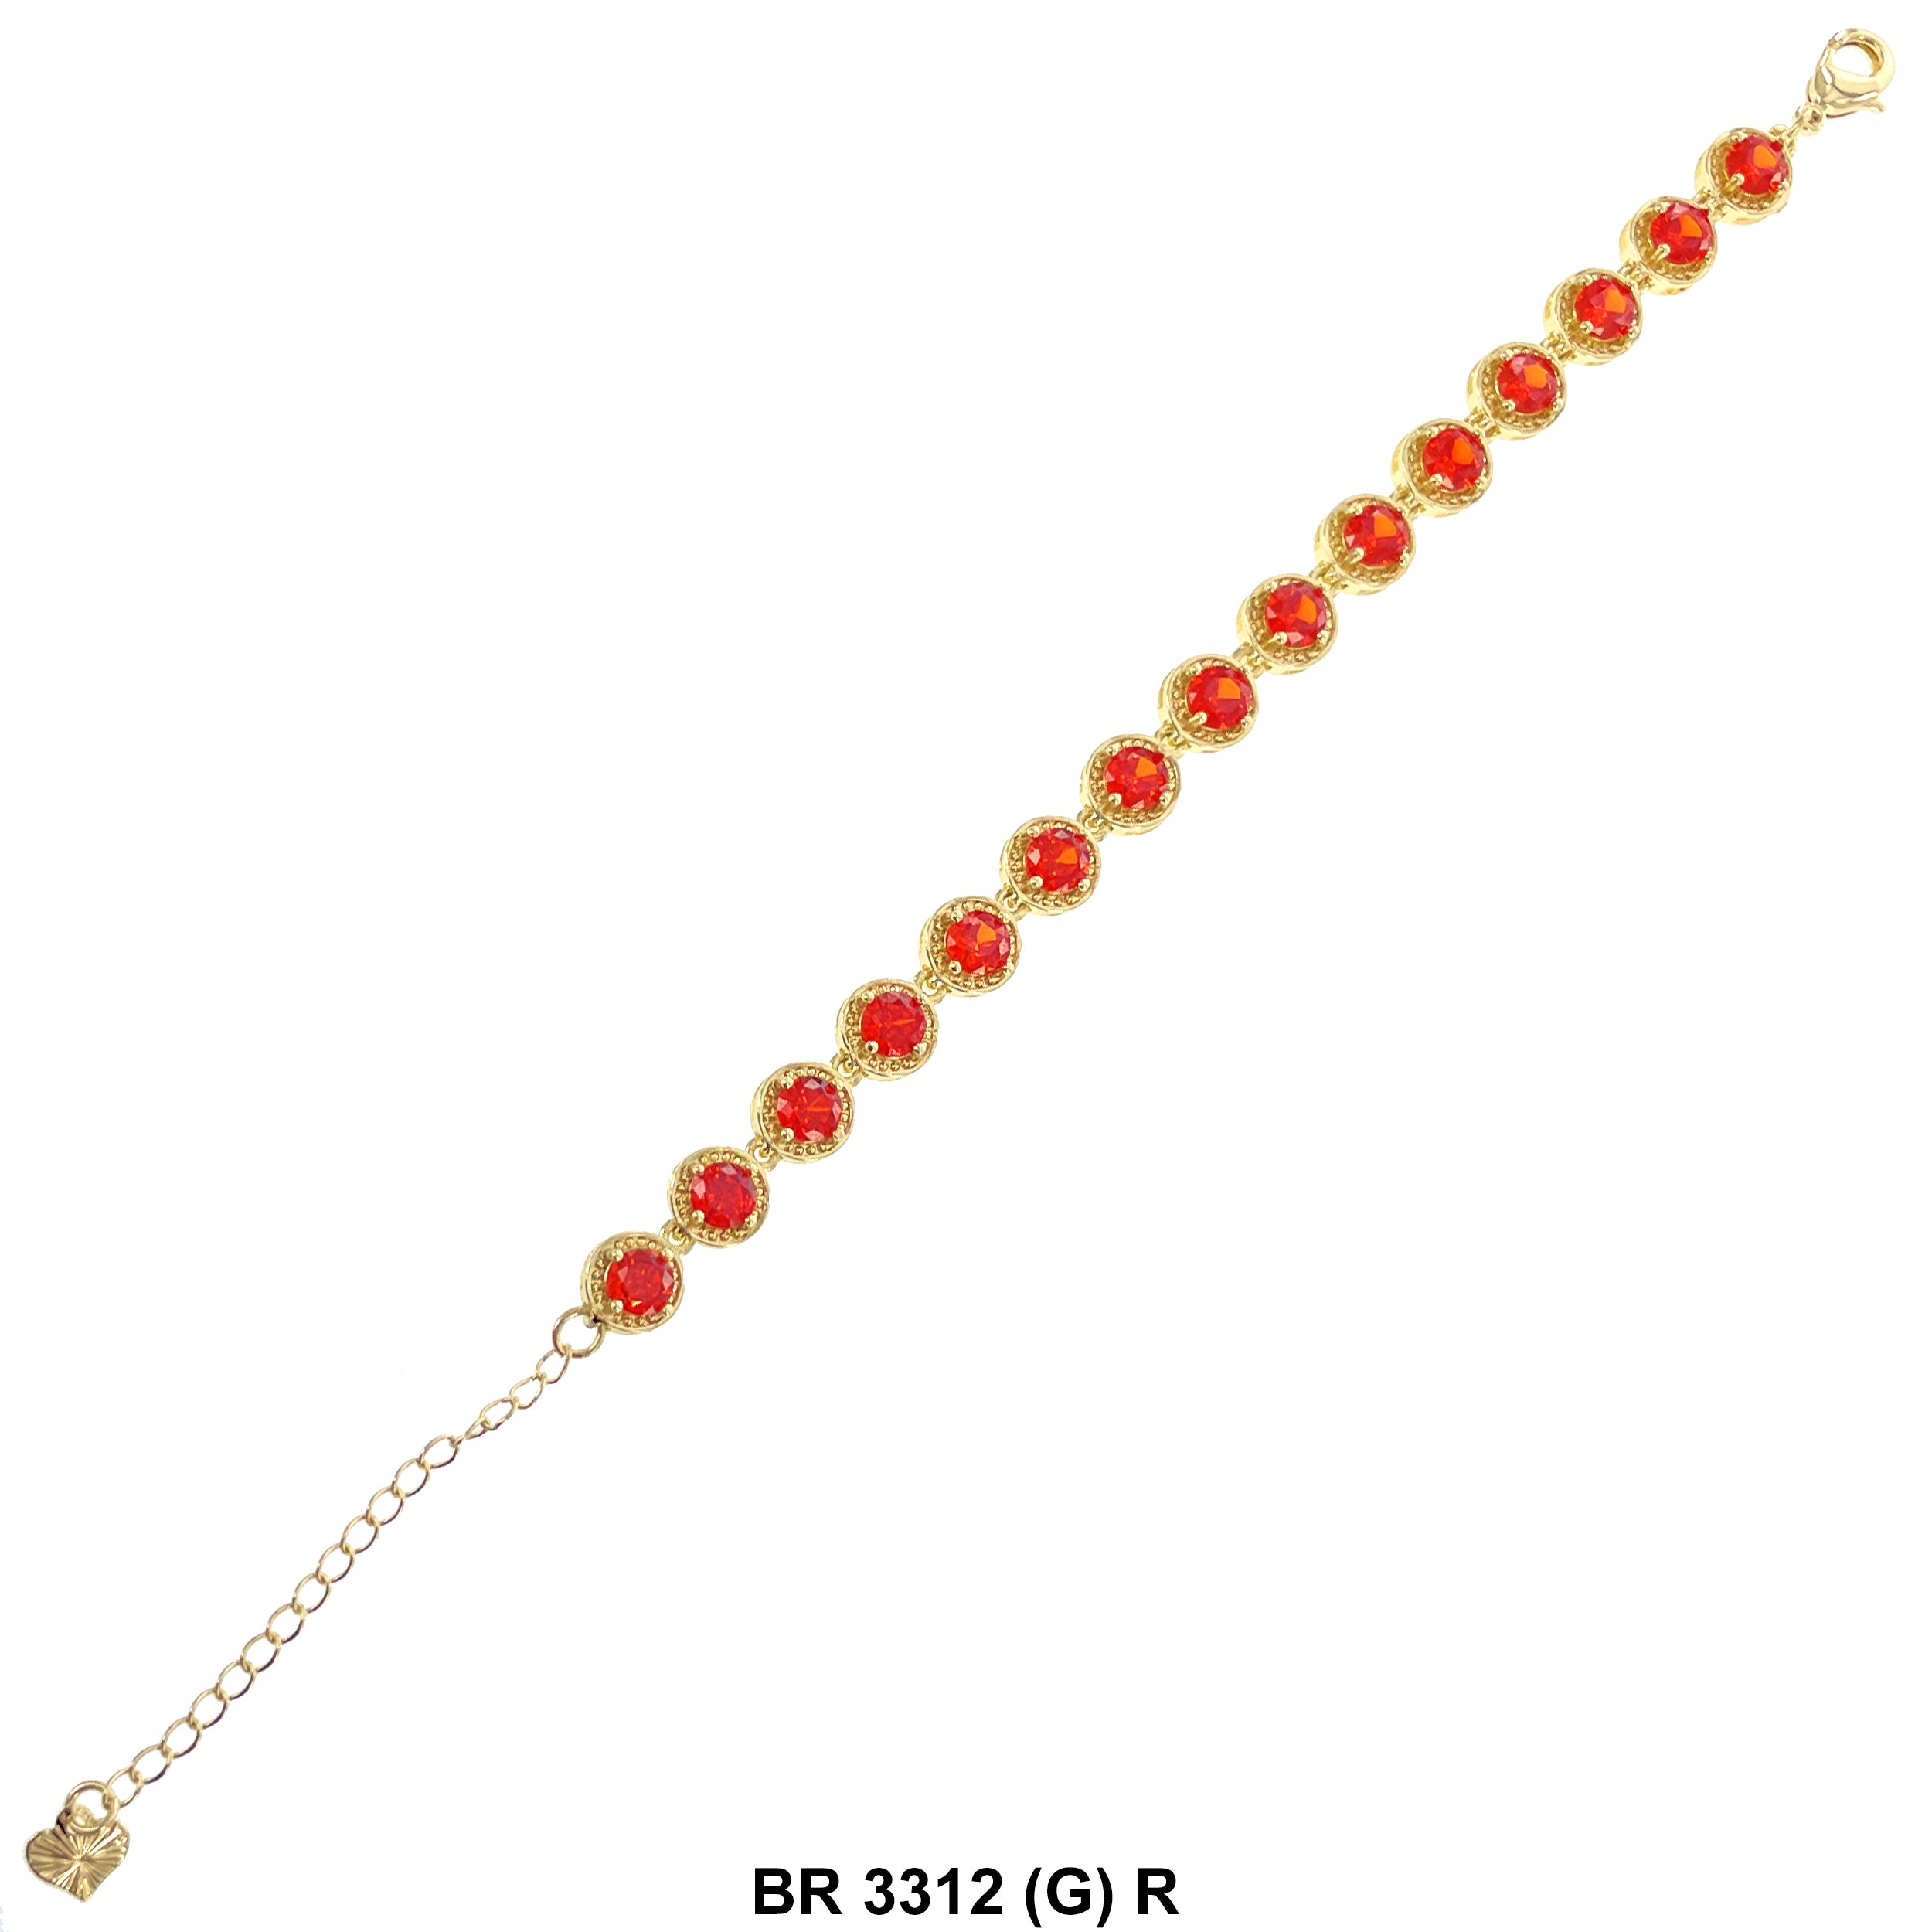 Cubic Zirconia Tennis Bracelet BR 3312 (G) R